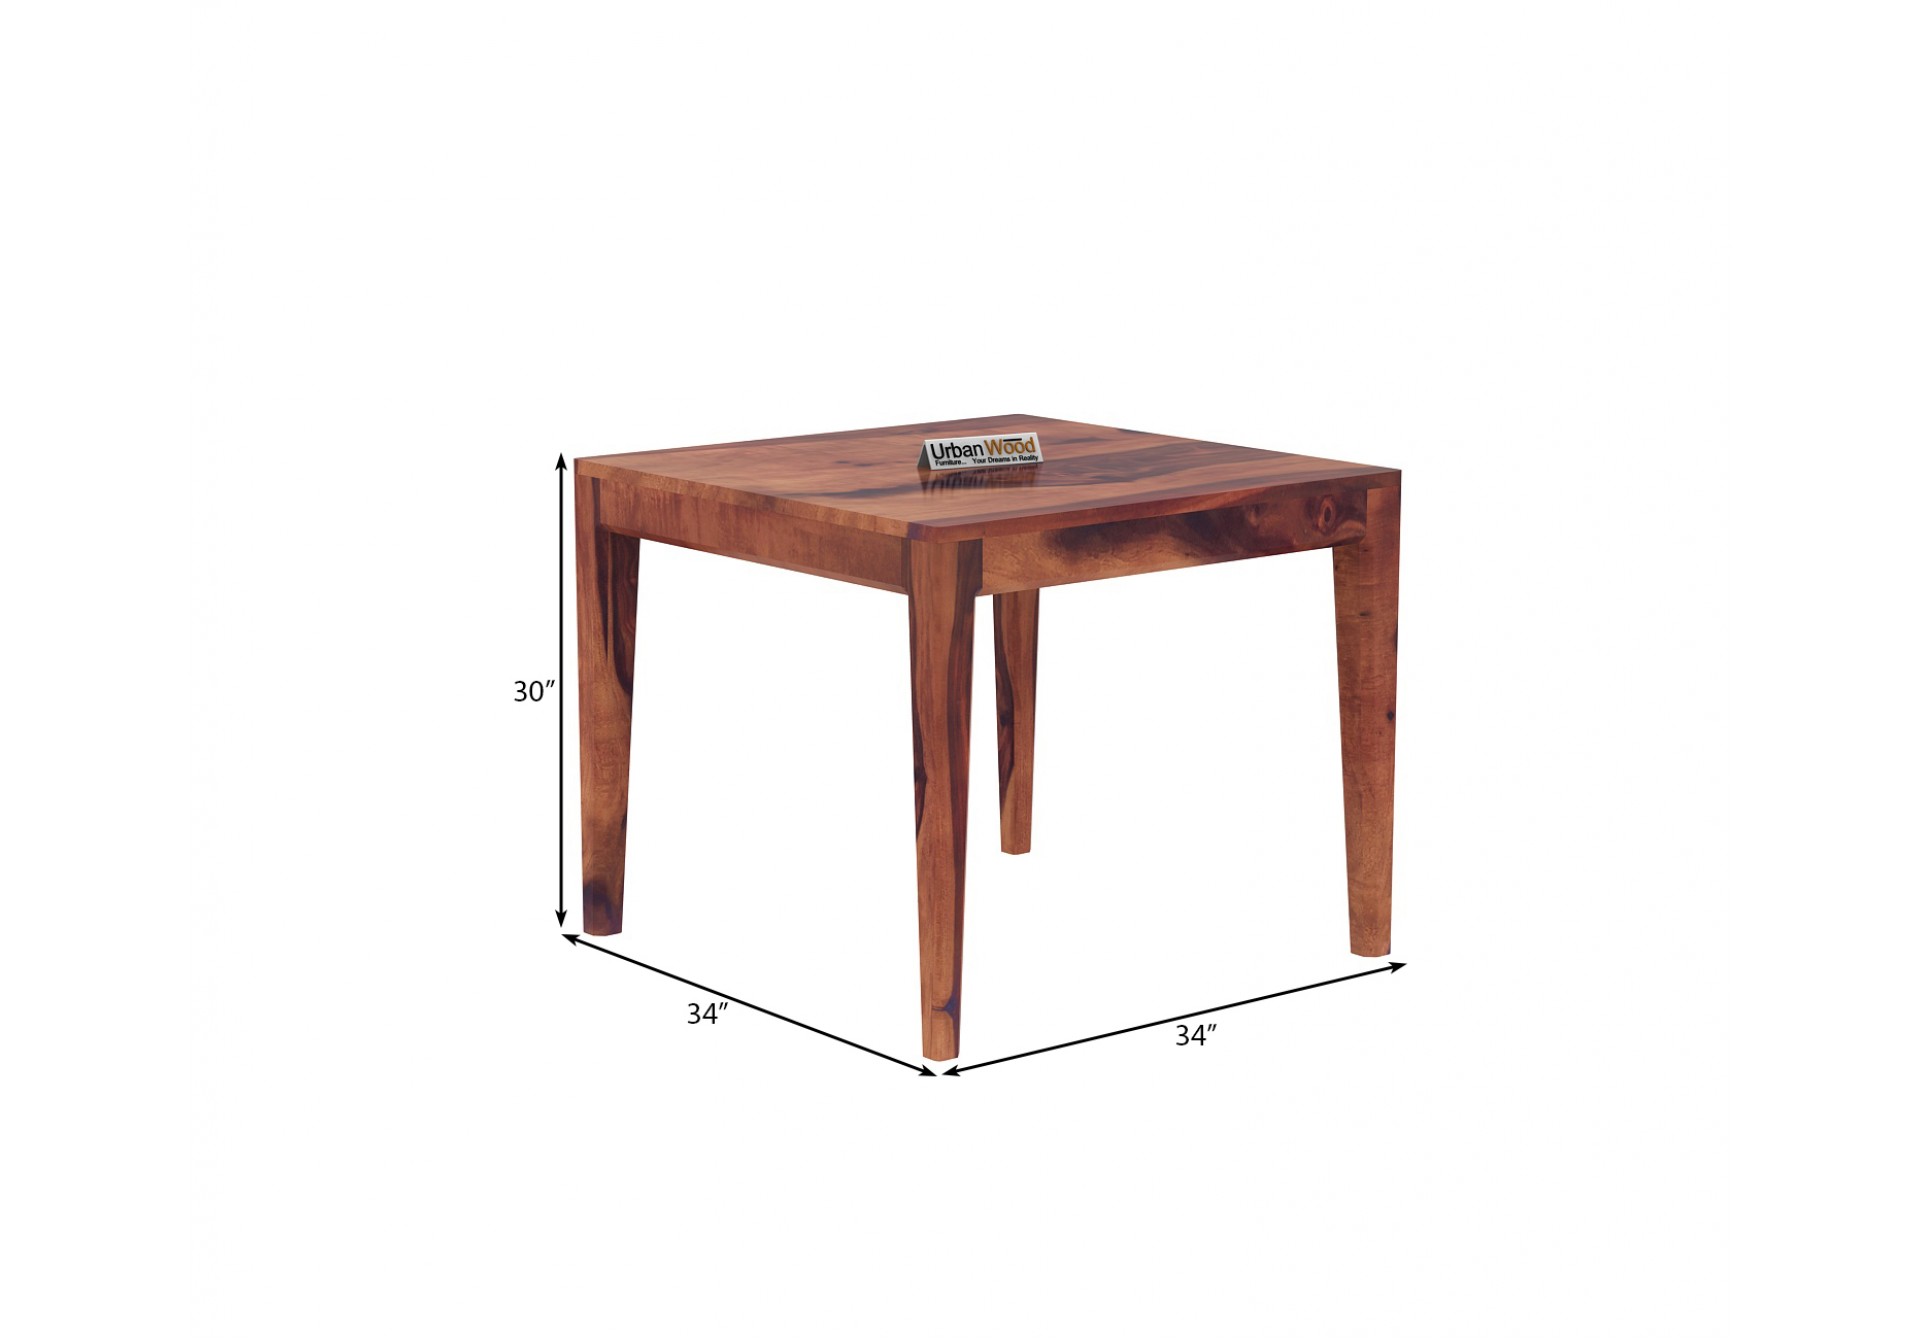 Deck 2-Seater Dining Table Set ( Teak Finish )